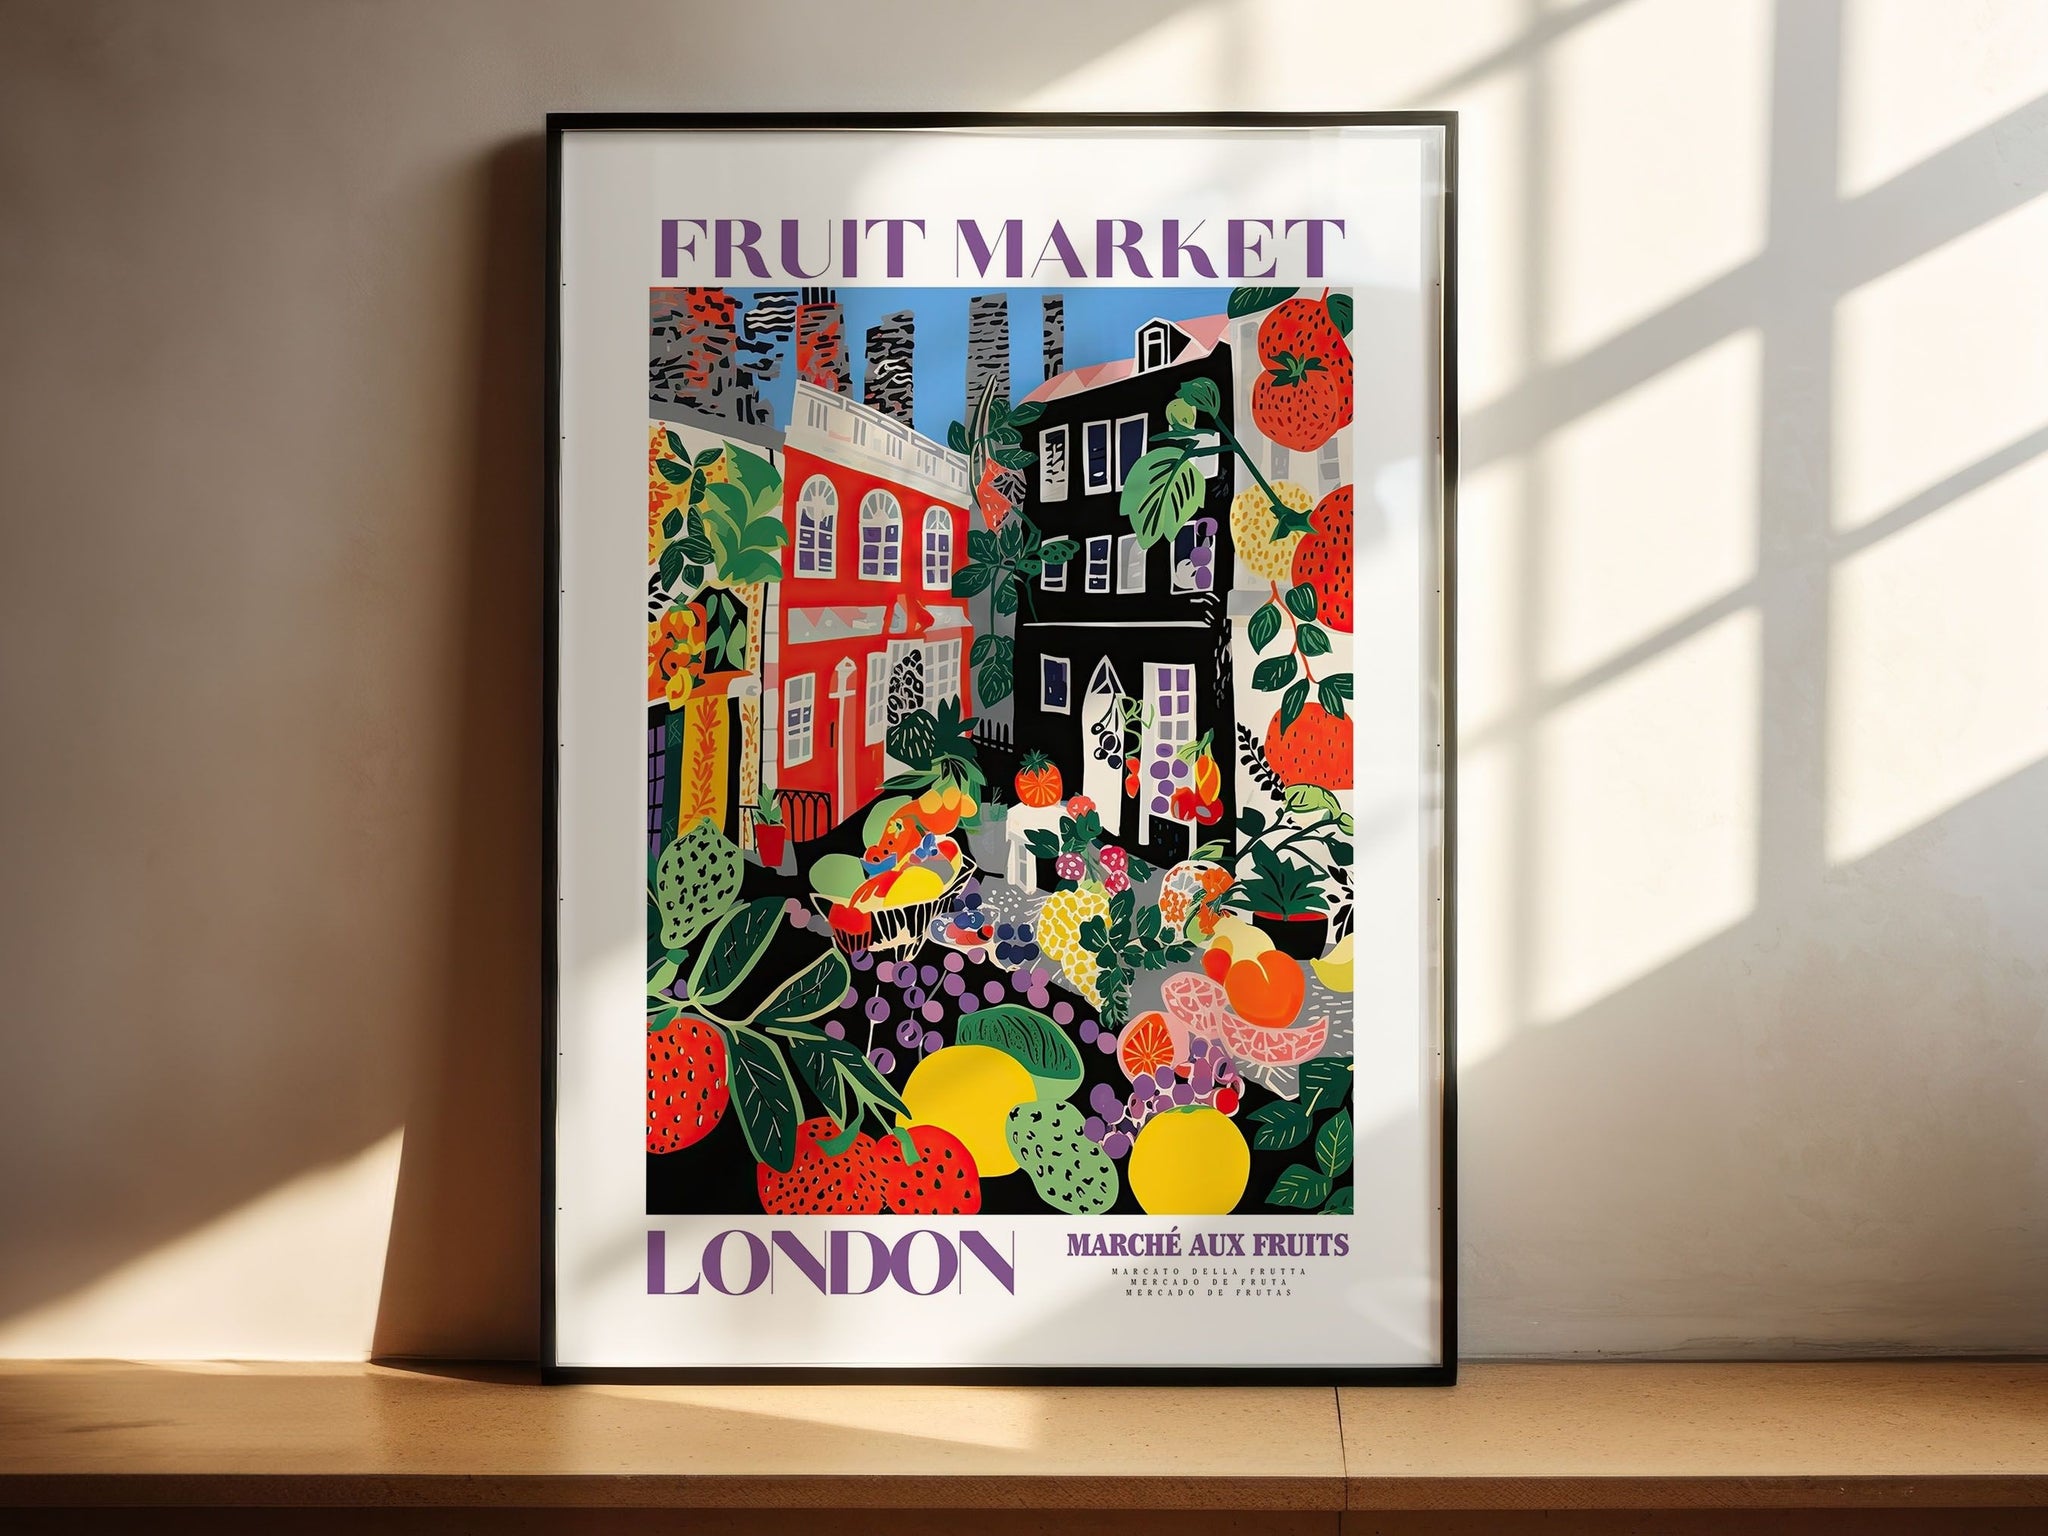 Fruit Market London, London Travel Art, Purple Wall Decor, Fruit Market Print, Fruit Market Poster, London City Art, Colorful Wall Art